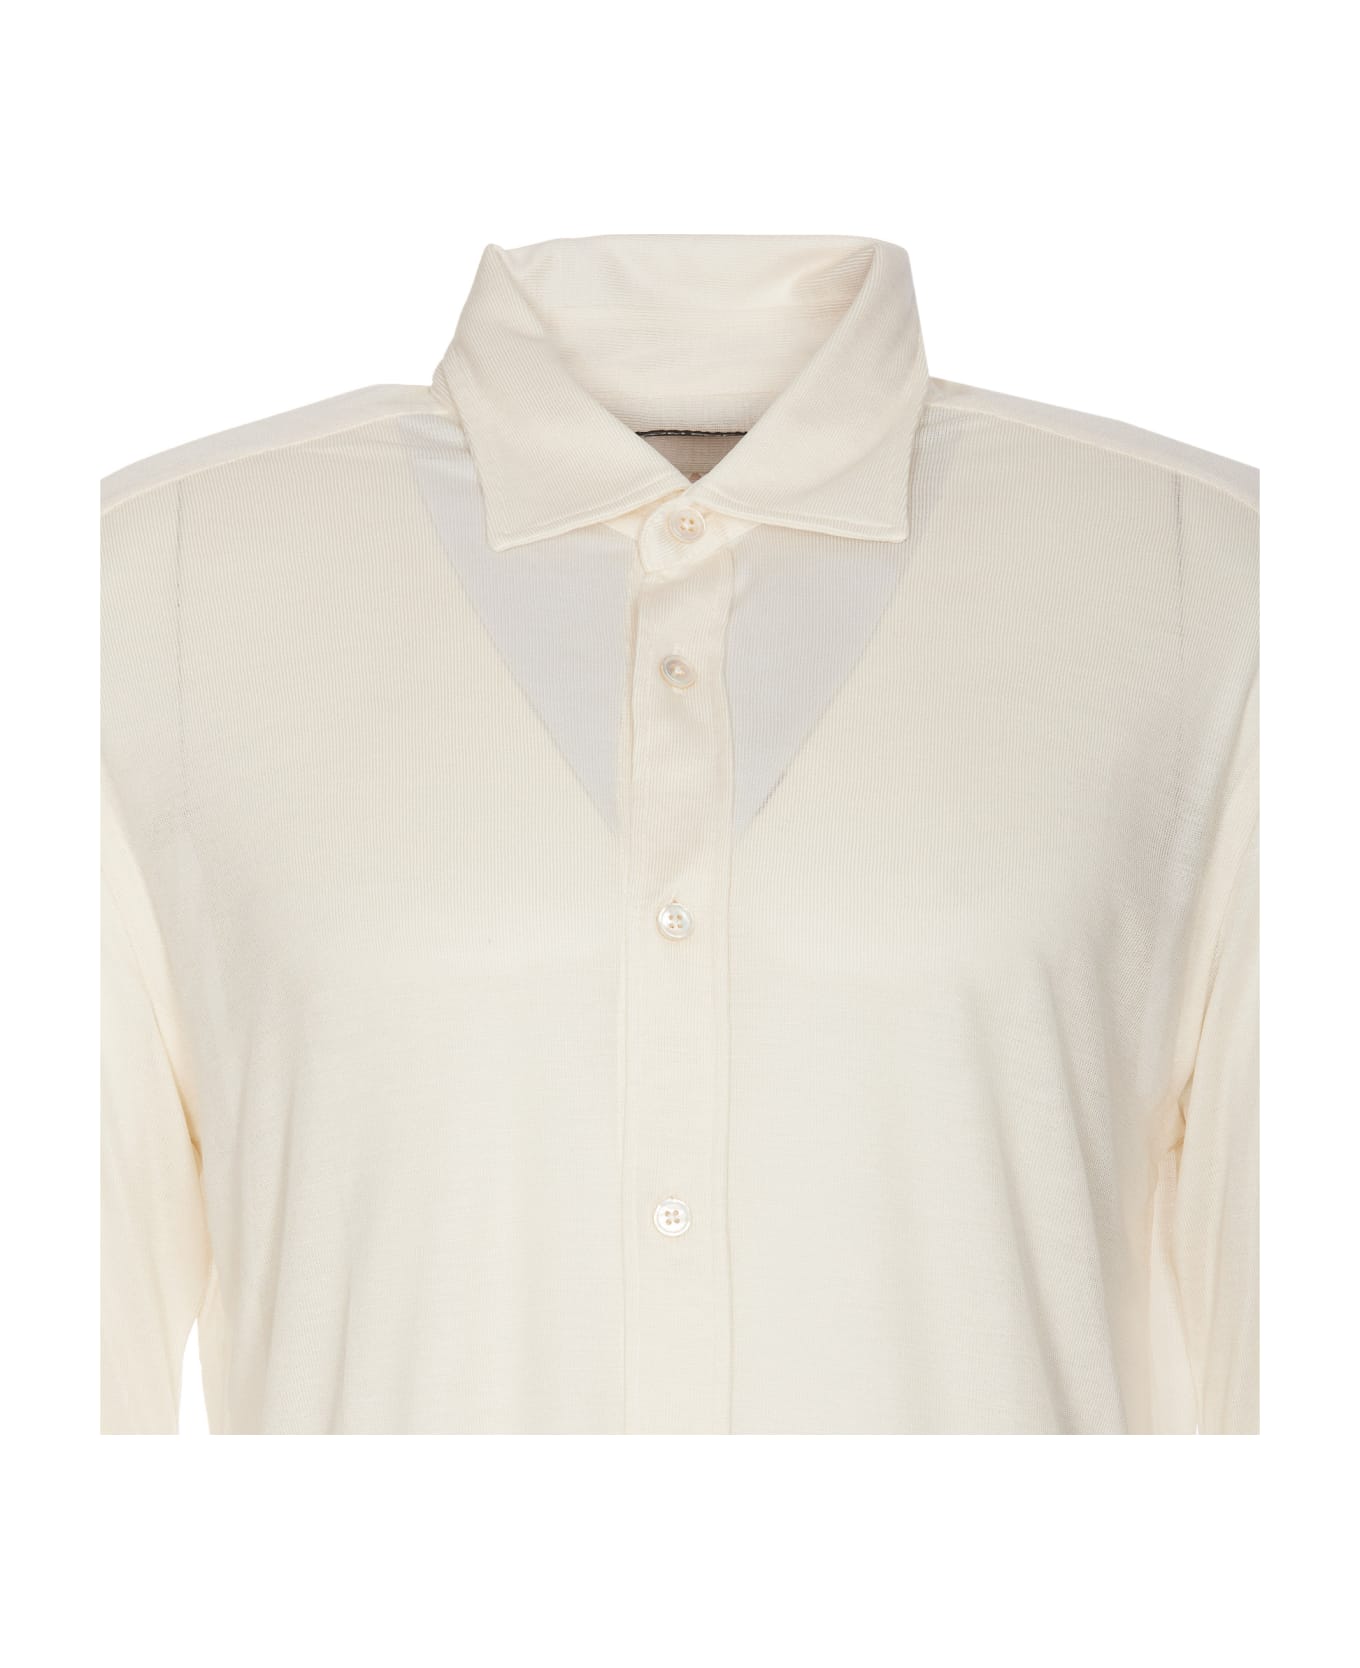 Tom Ford Silk Sheer Shirt - White シャツ